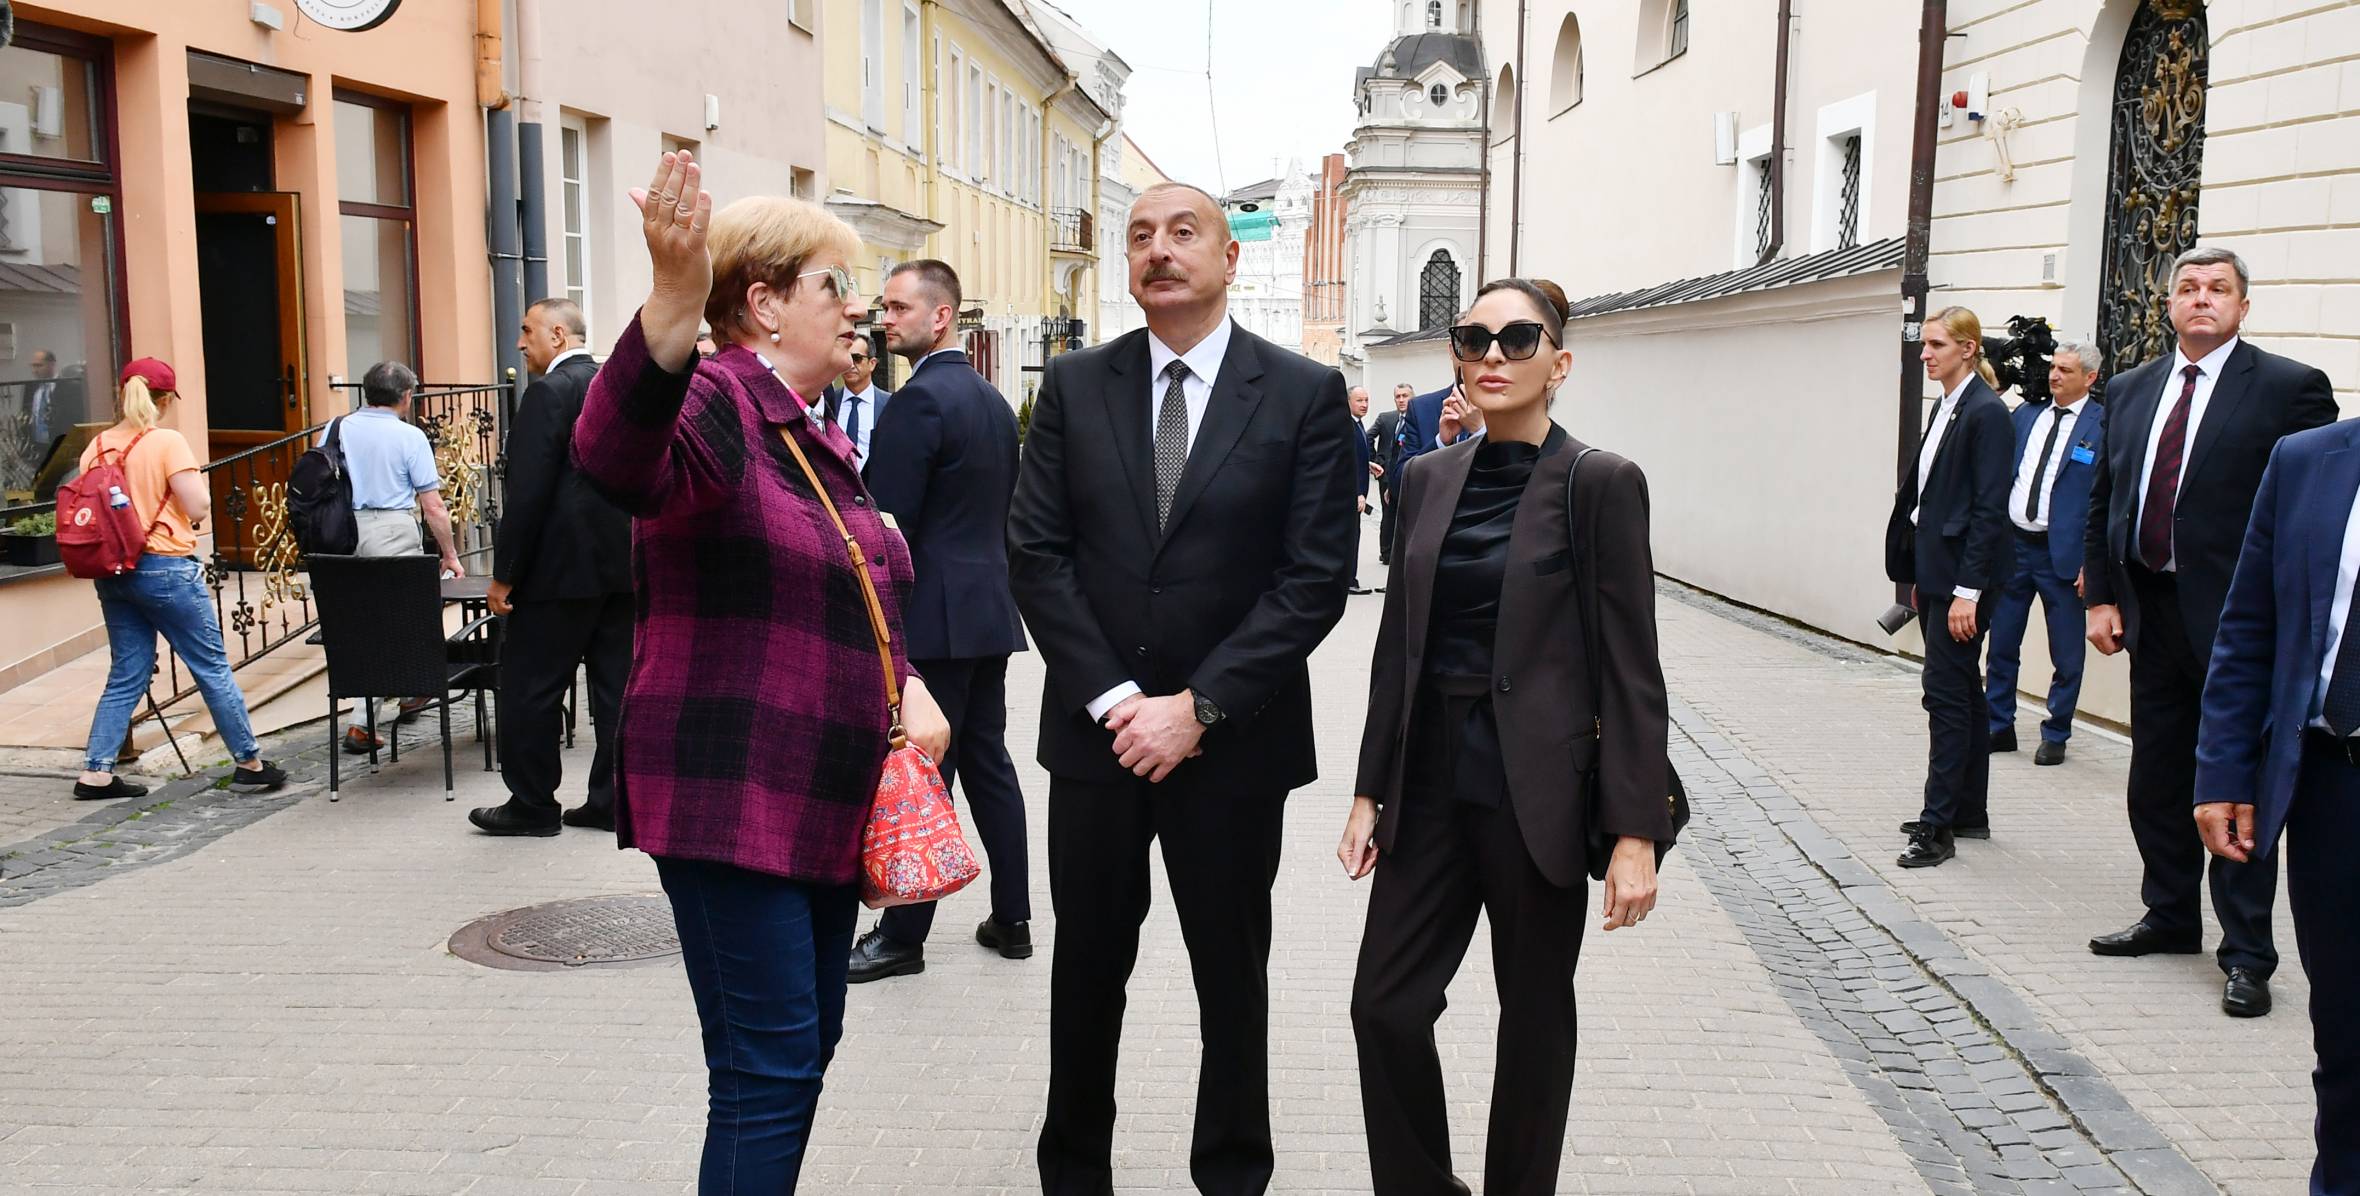 Ilham Aliyev and First Lady Mehriban Aliyeva toured Vilnius Old Town